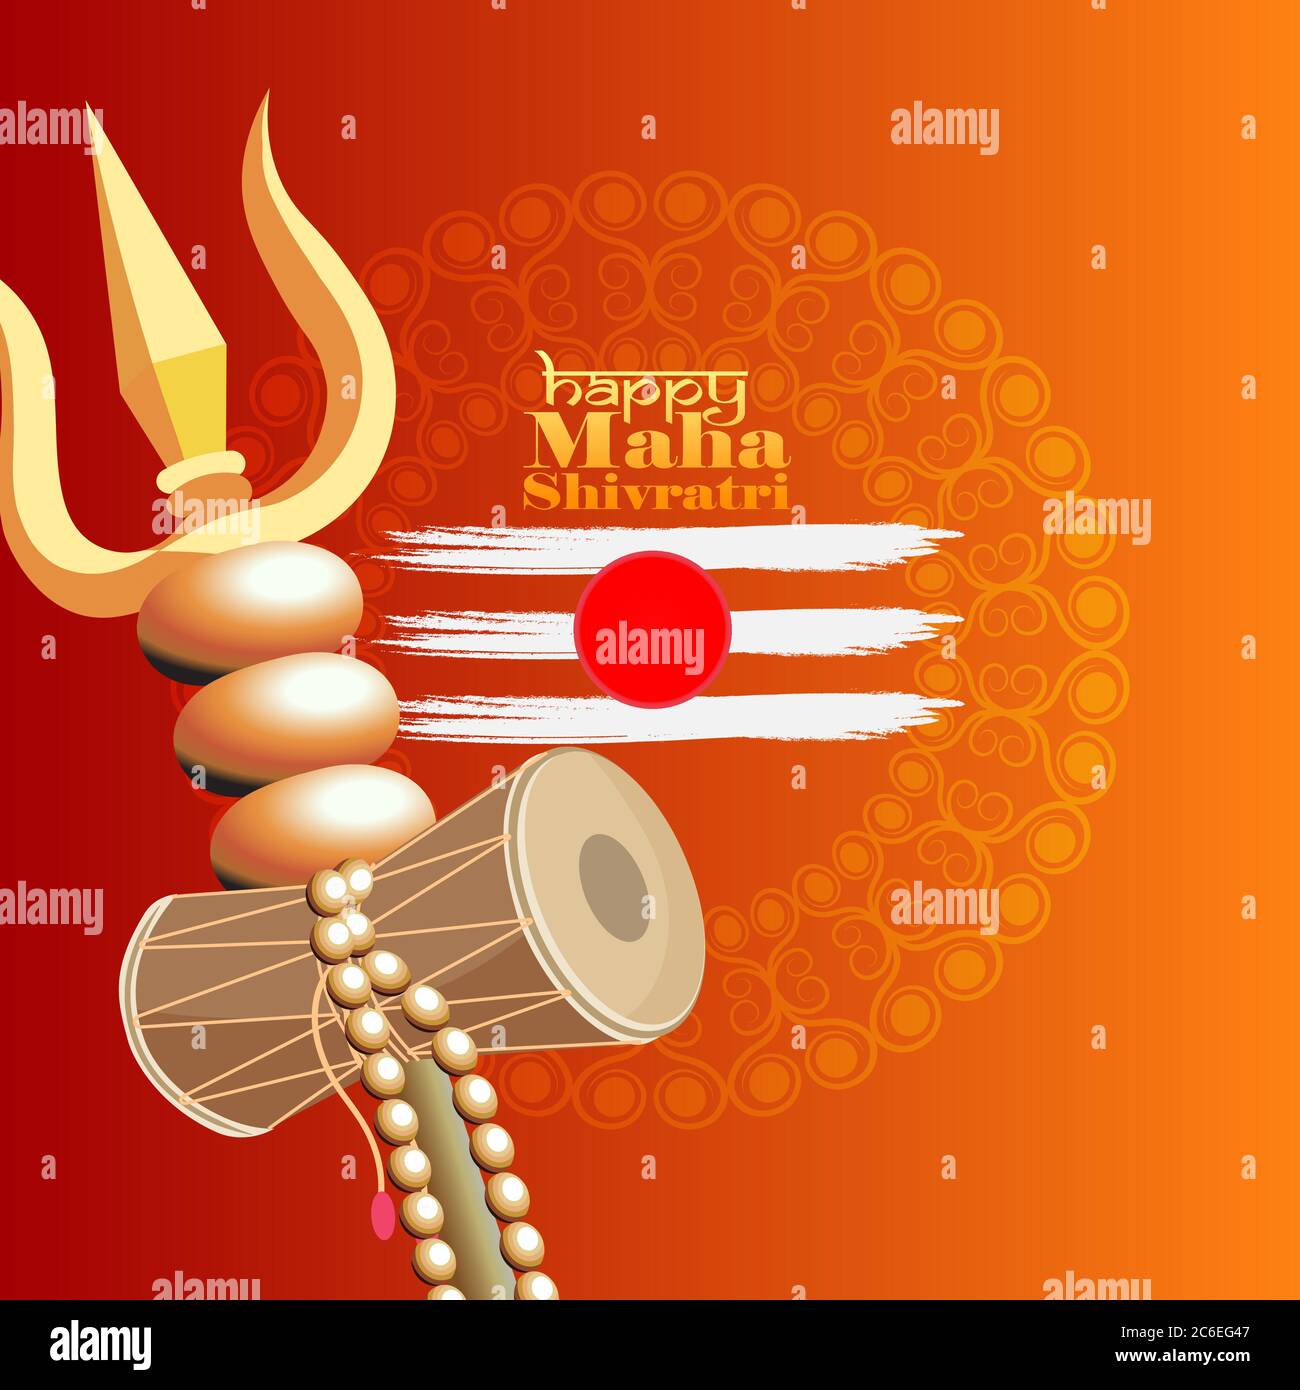 Vektor-Illustration der Grußkarte für maha Shivratri, Grußkarte für Hindu-Festival Maha Shivratri. Grunge Textur Mahadev Tilak Zeichen. Stock Vektor